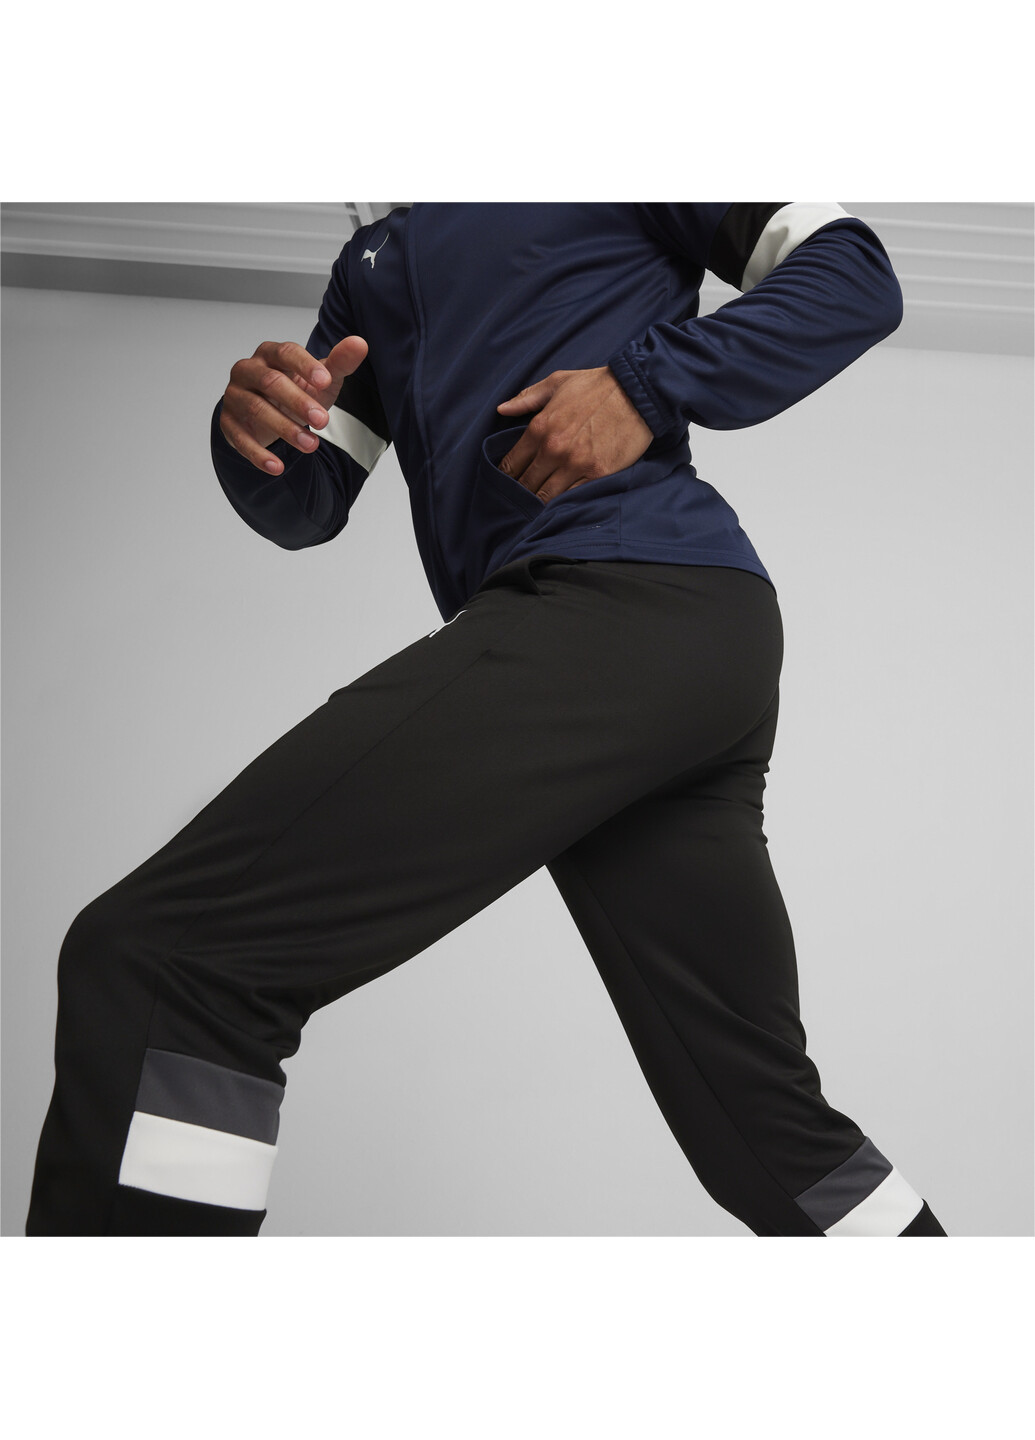 Спортивный костюм teamRISE Men's Football Tracksuit Puma (278611507)